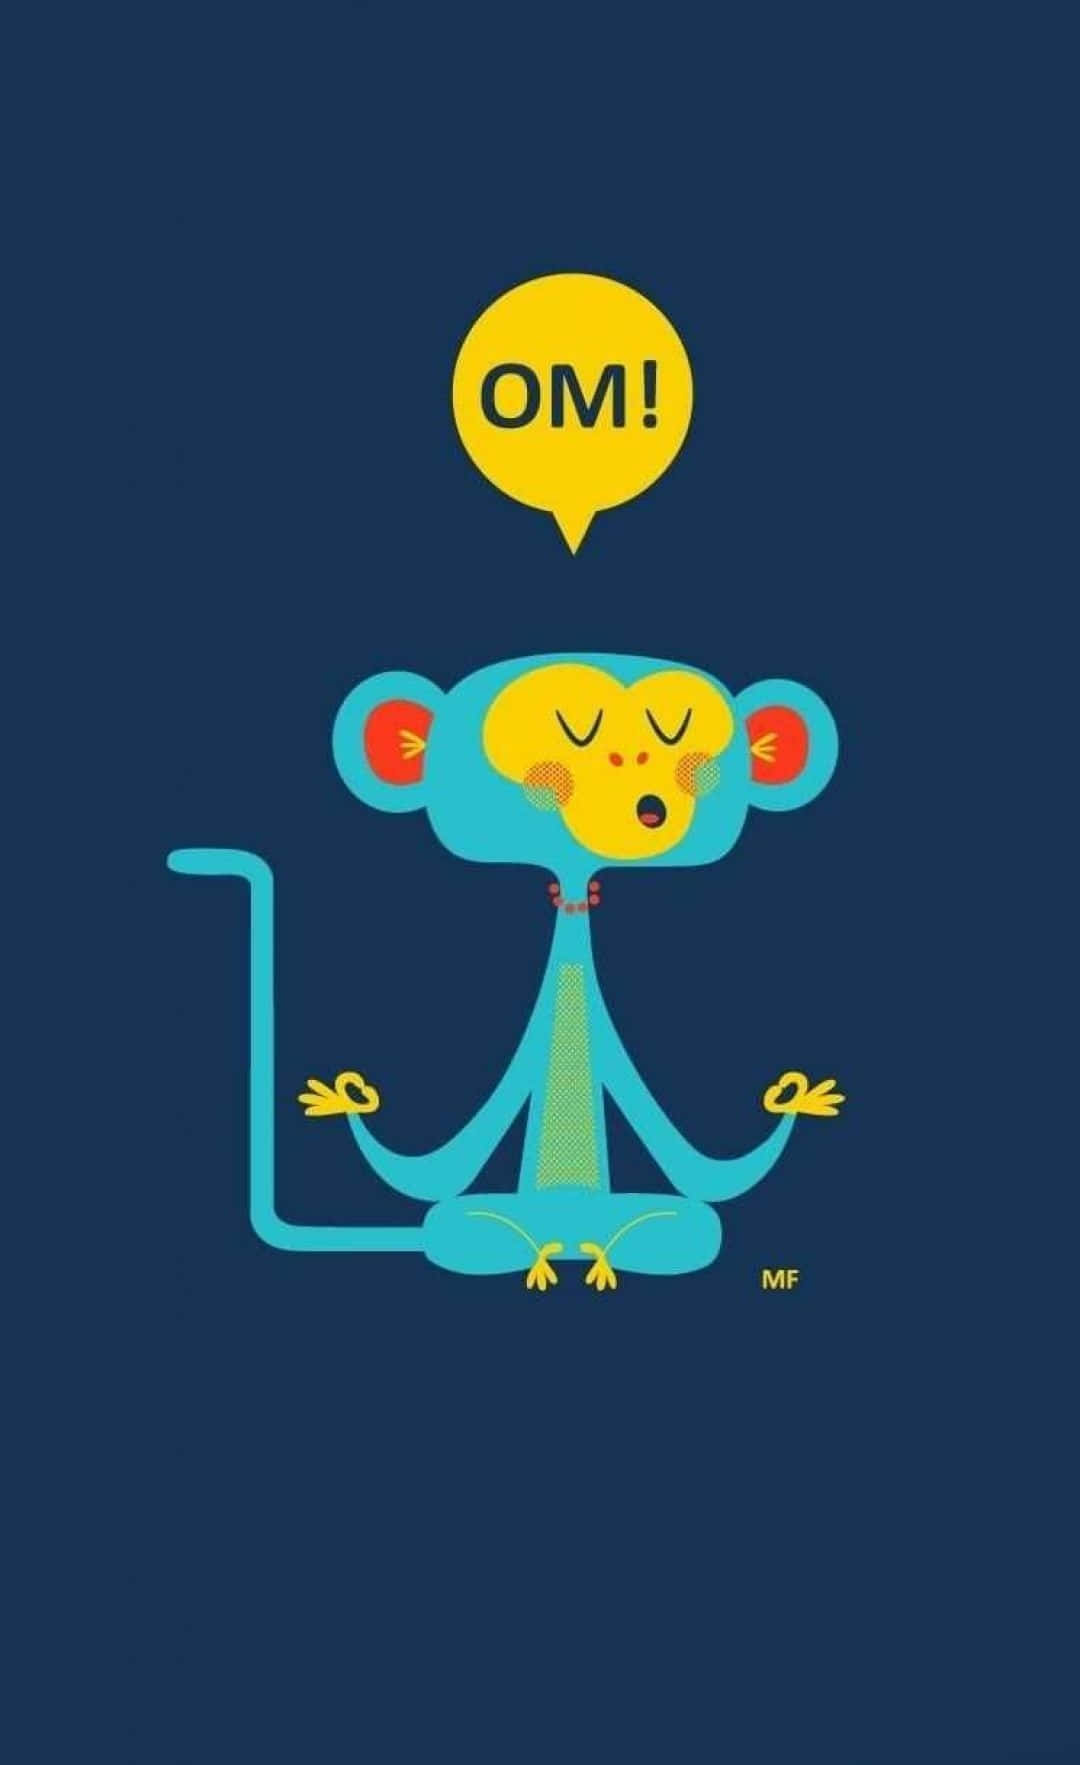 A Cartoon Monkey With A Speech Bubble Saying Om